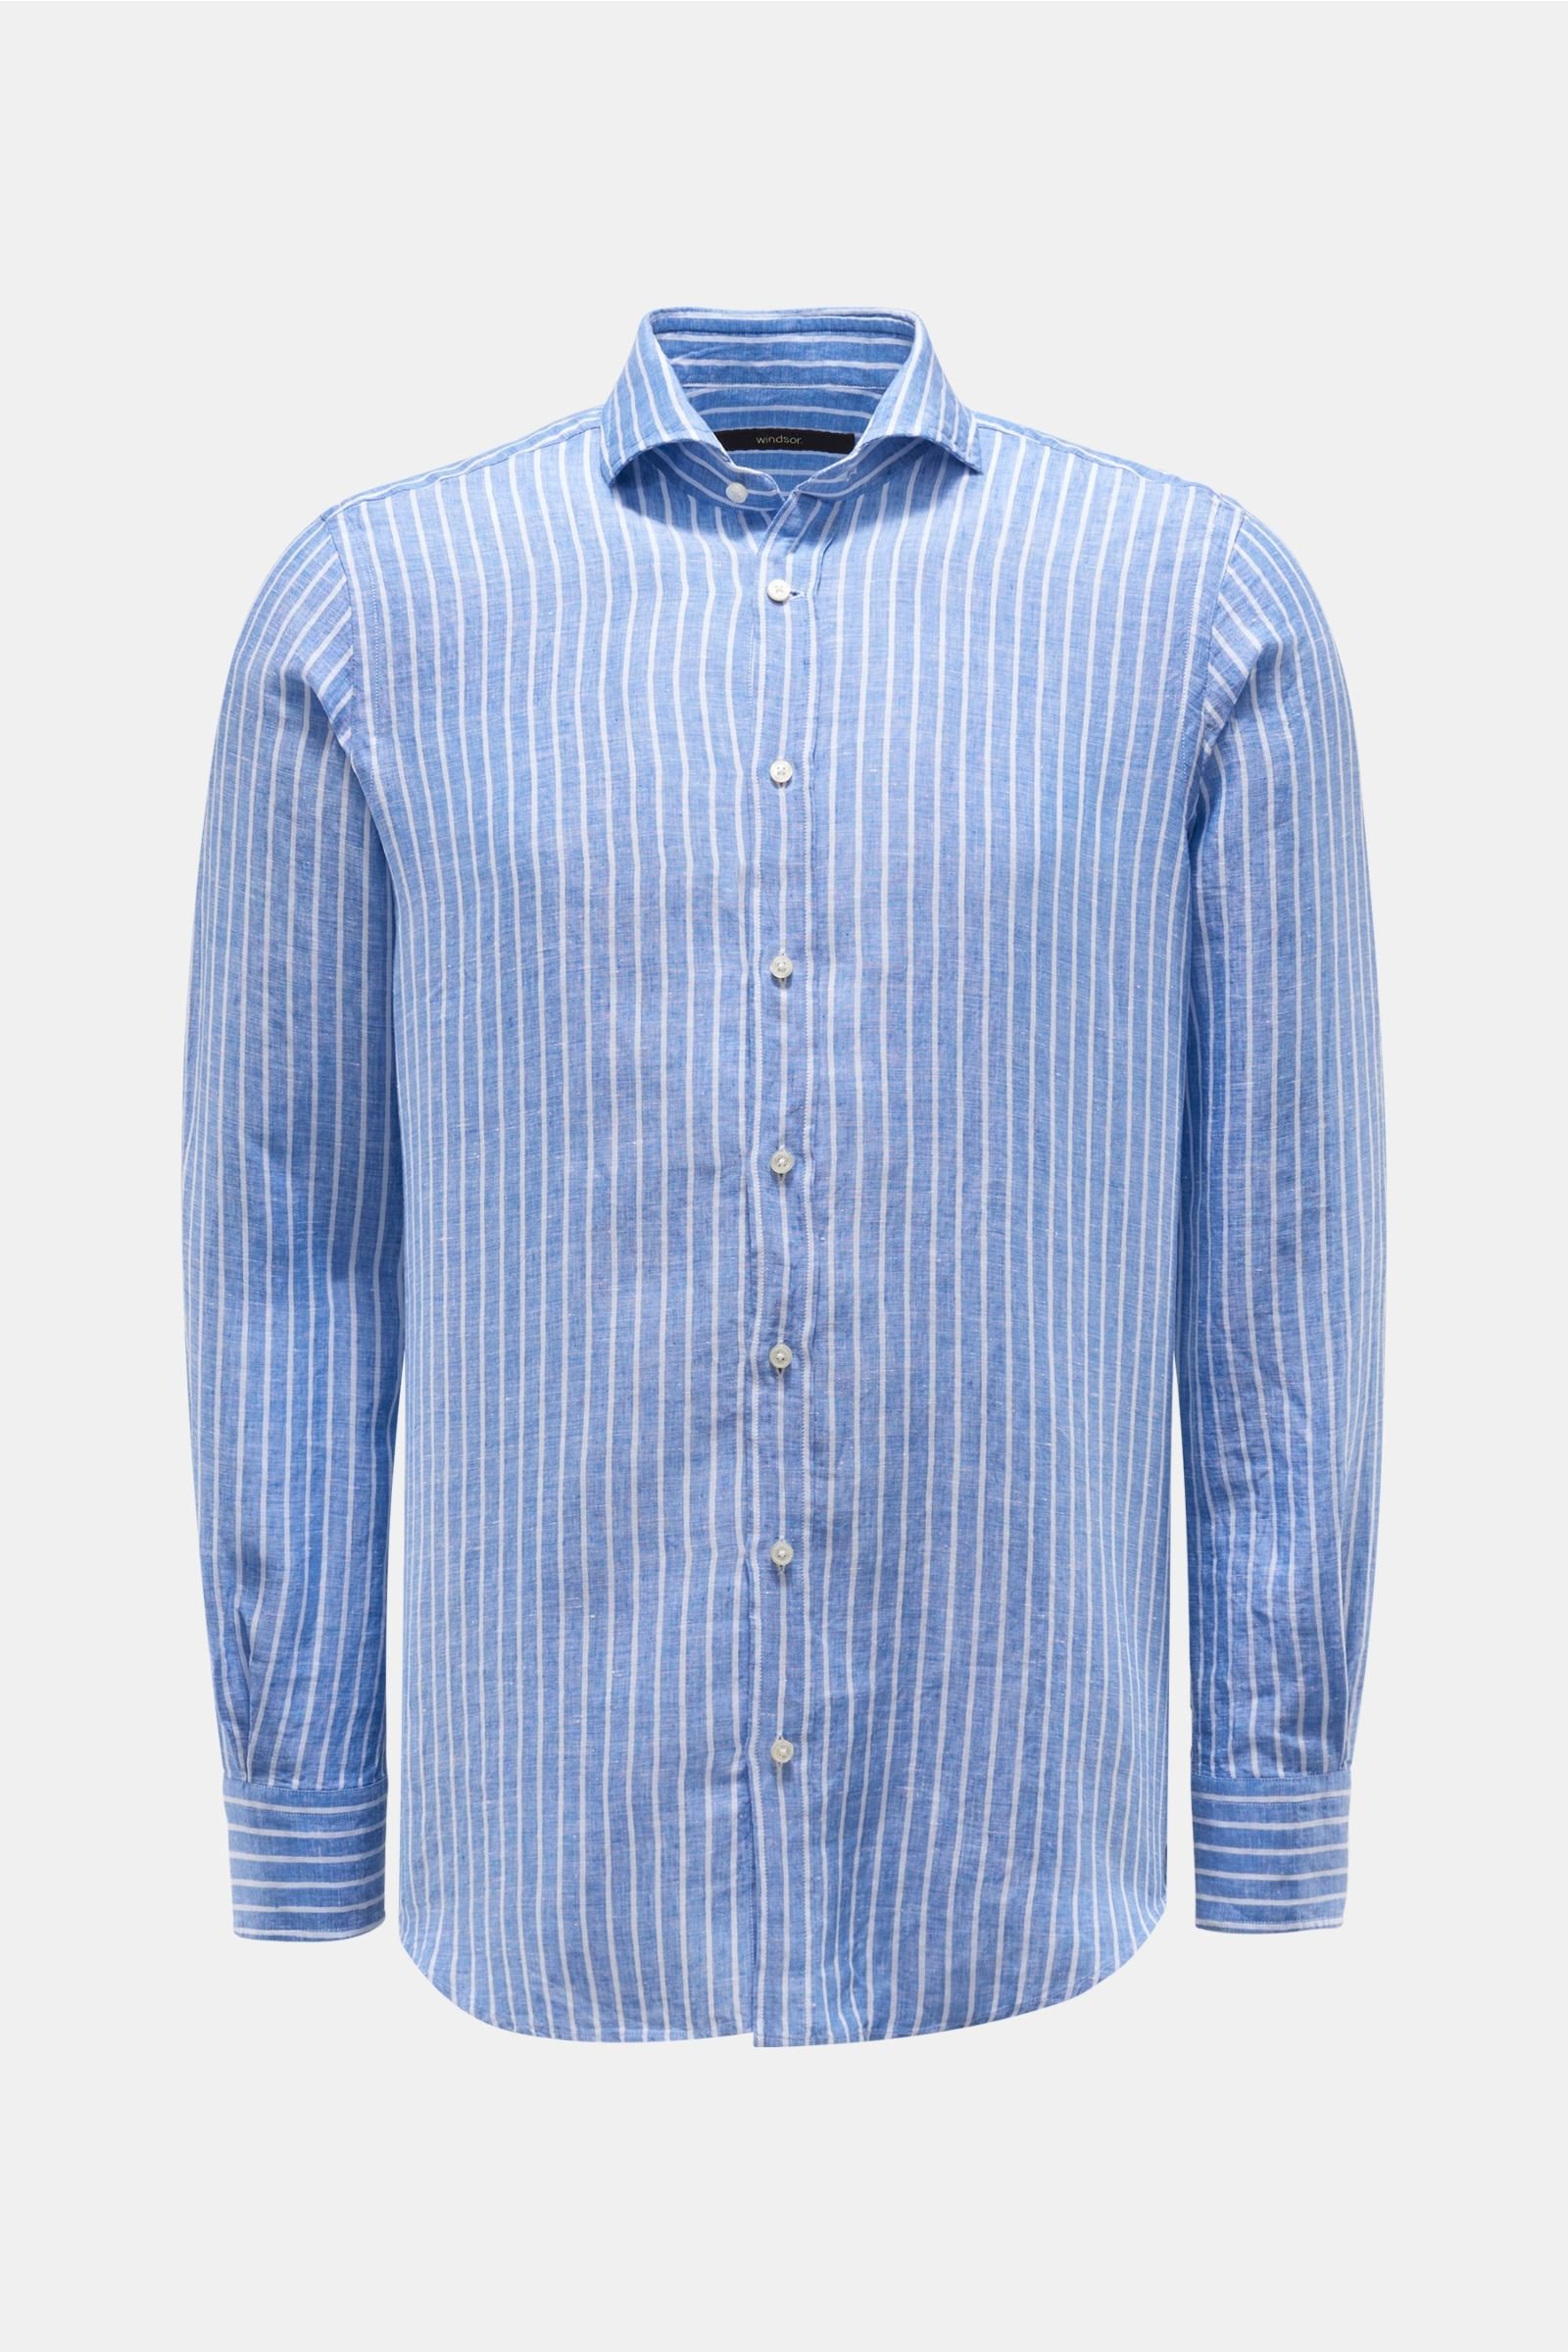 Linen shirt 'Lano' shark collar smoky blue/white striped